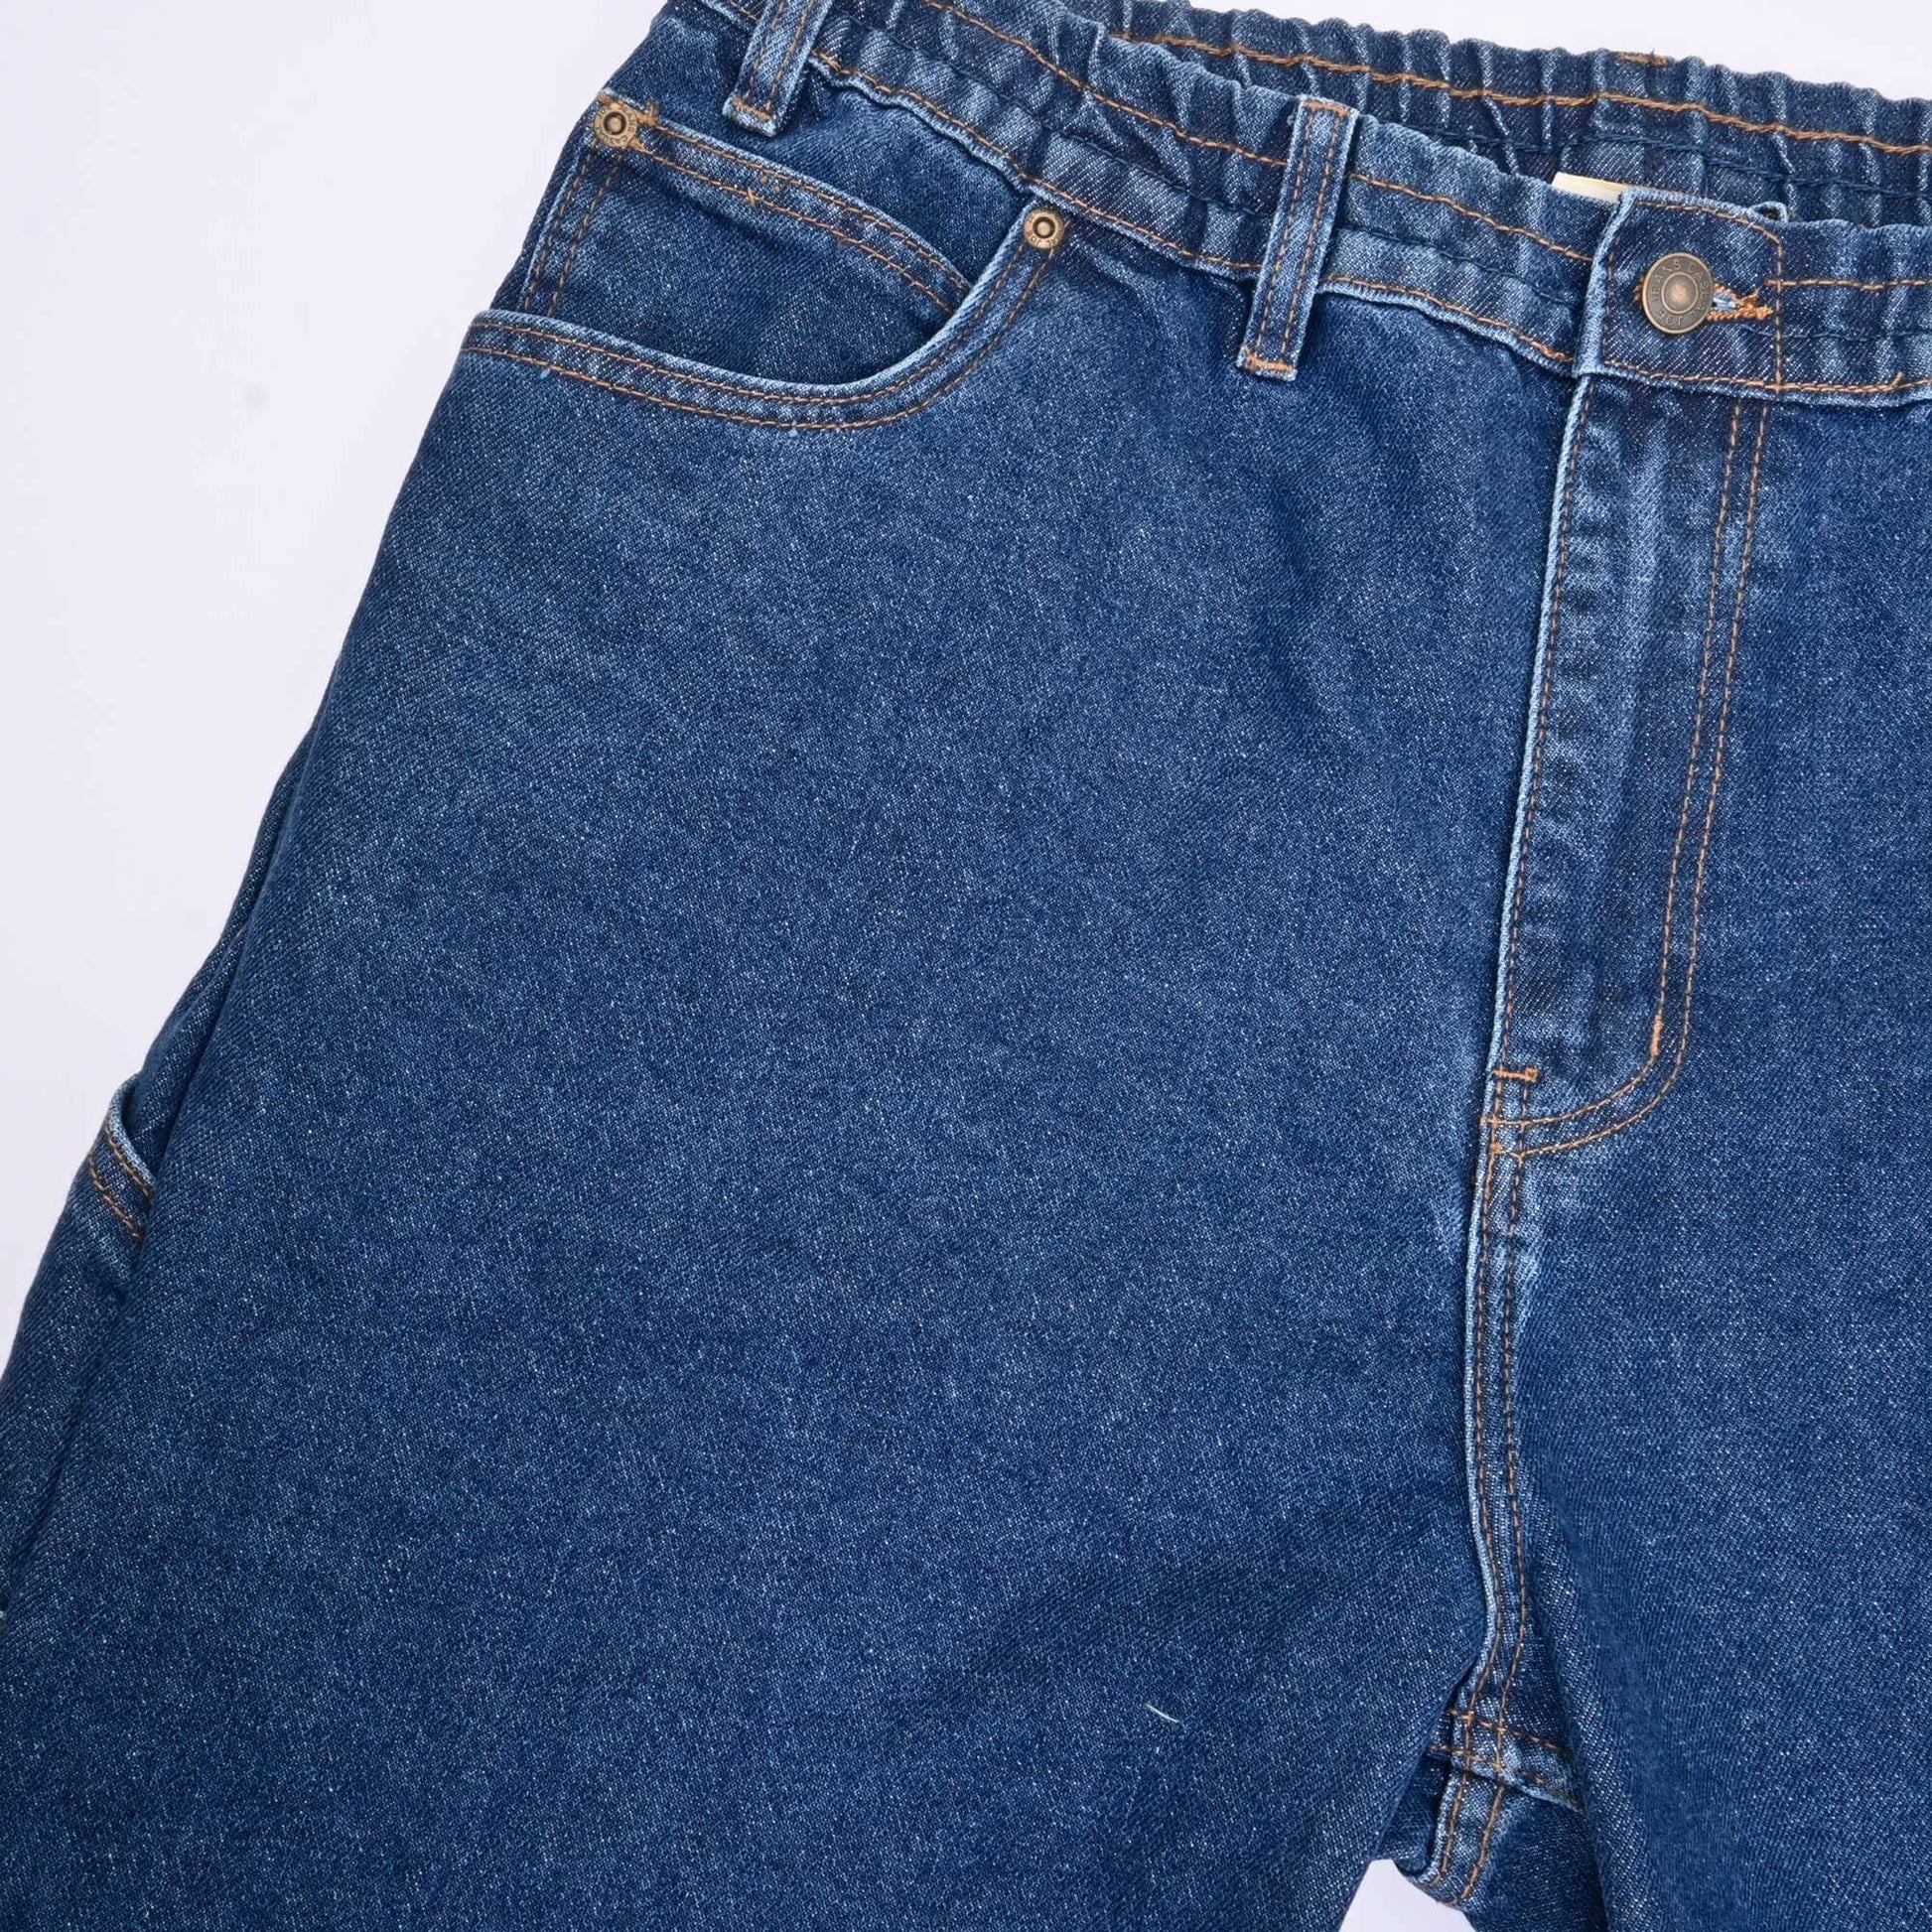 Haband Joe Men's Regular Fit Denim Pants - Authentic Style & Comfort Men's Denim SNR 